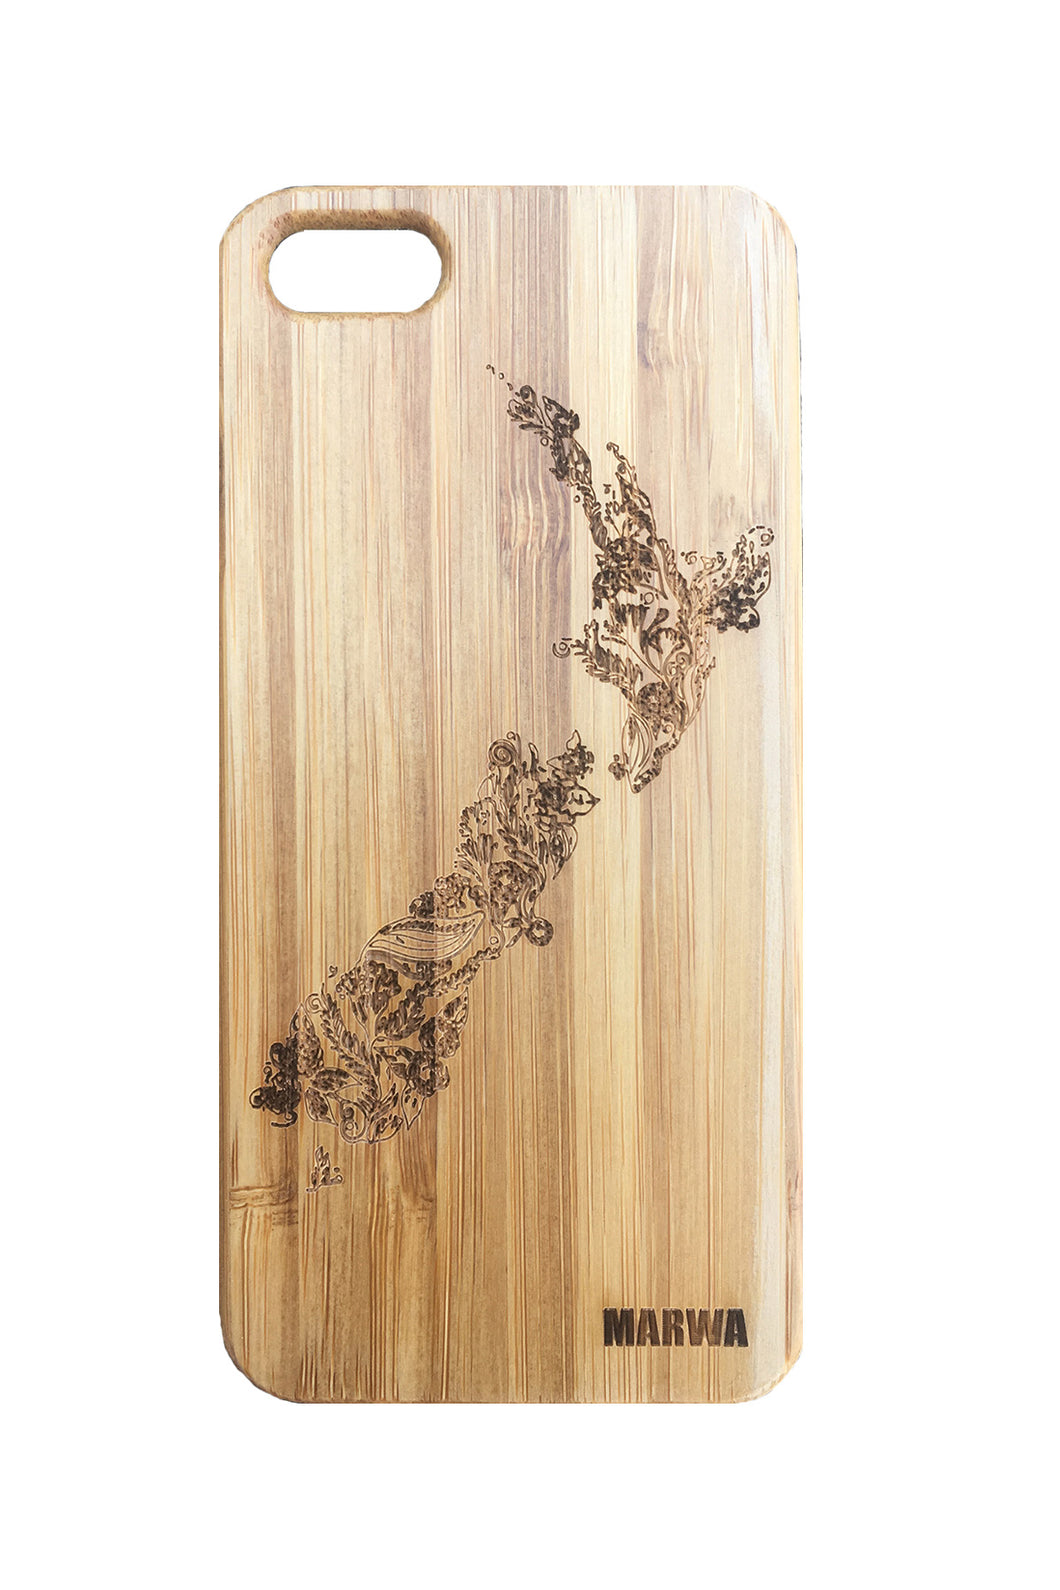 'New Zealand' Bamboo iPhone 6 Phone Case